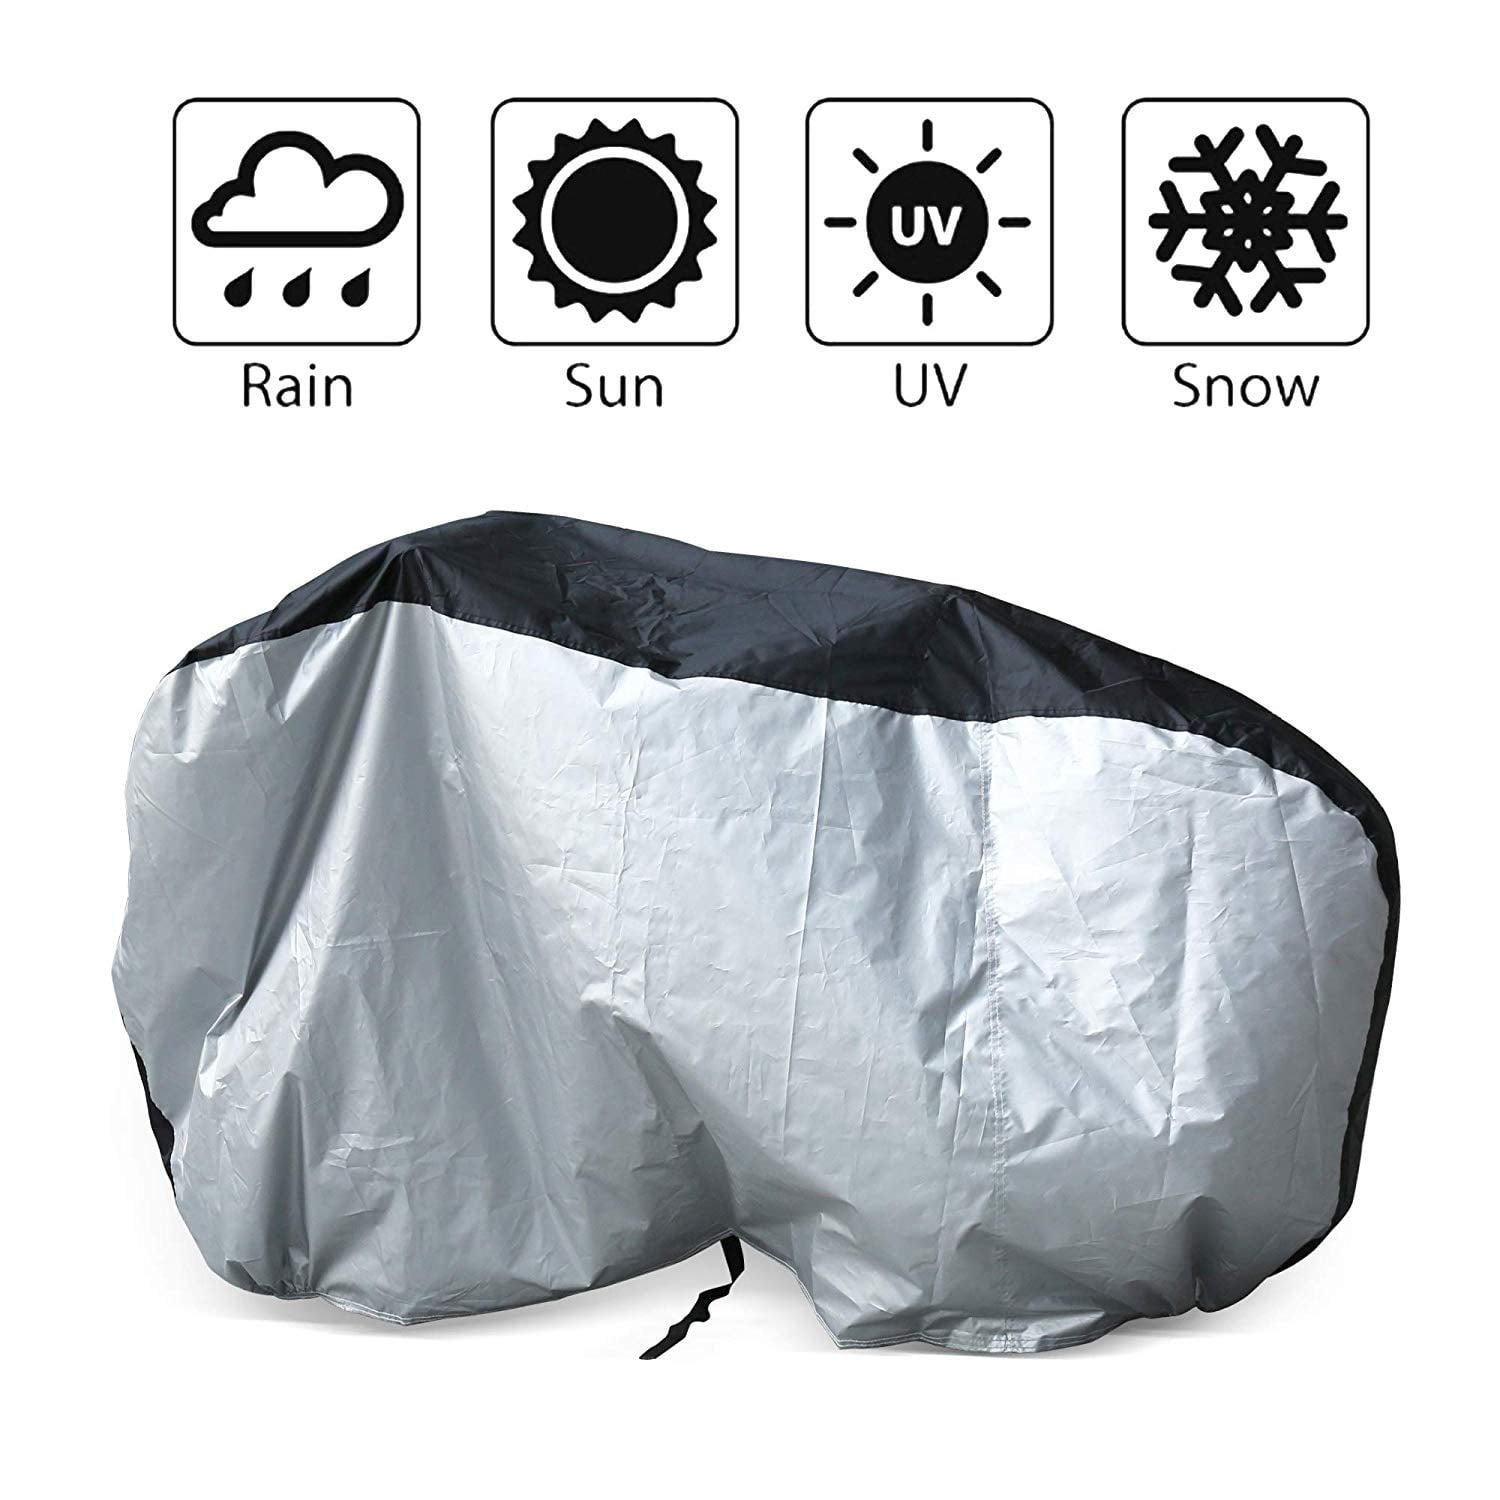 Details about   Outdoor Bike Rack Bag Rain Cover Folding Waterproof Dust-proof Raincoat